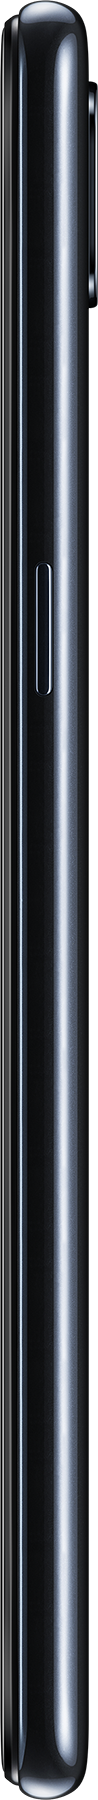 Samsung Galaxy A10s SM-A107F/DS